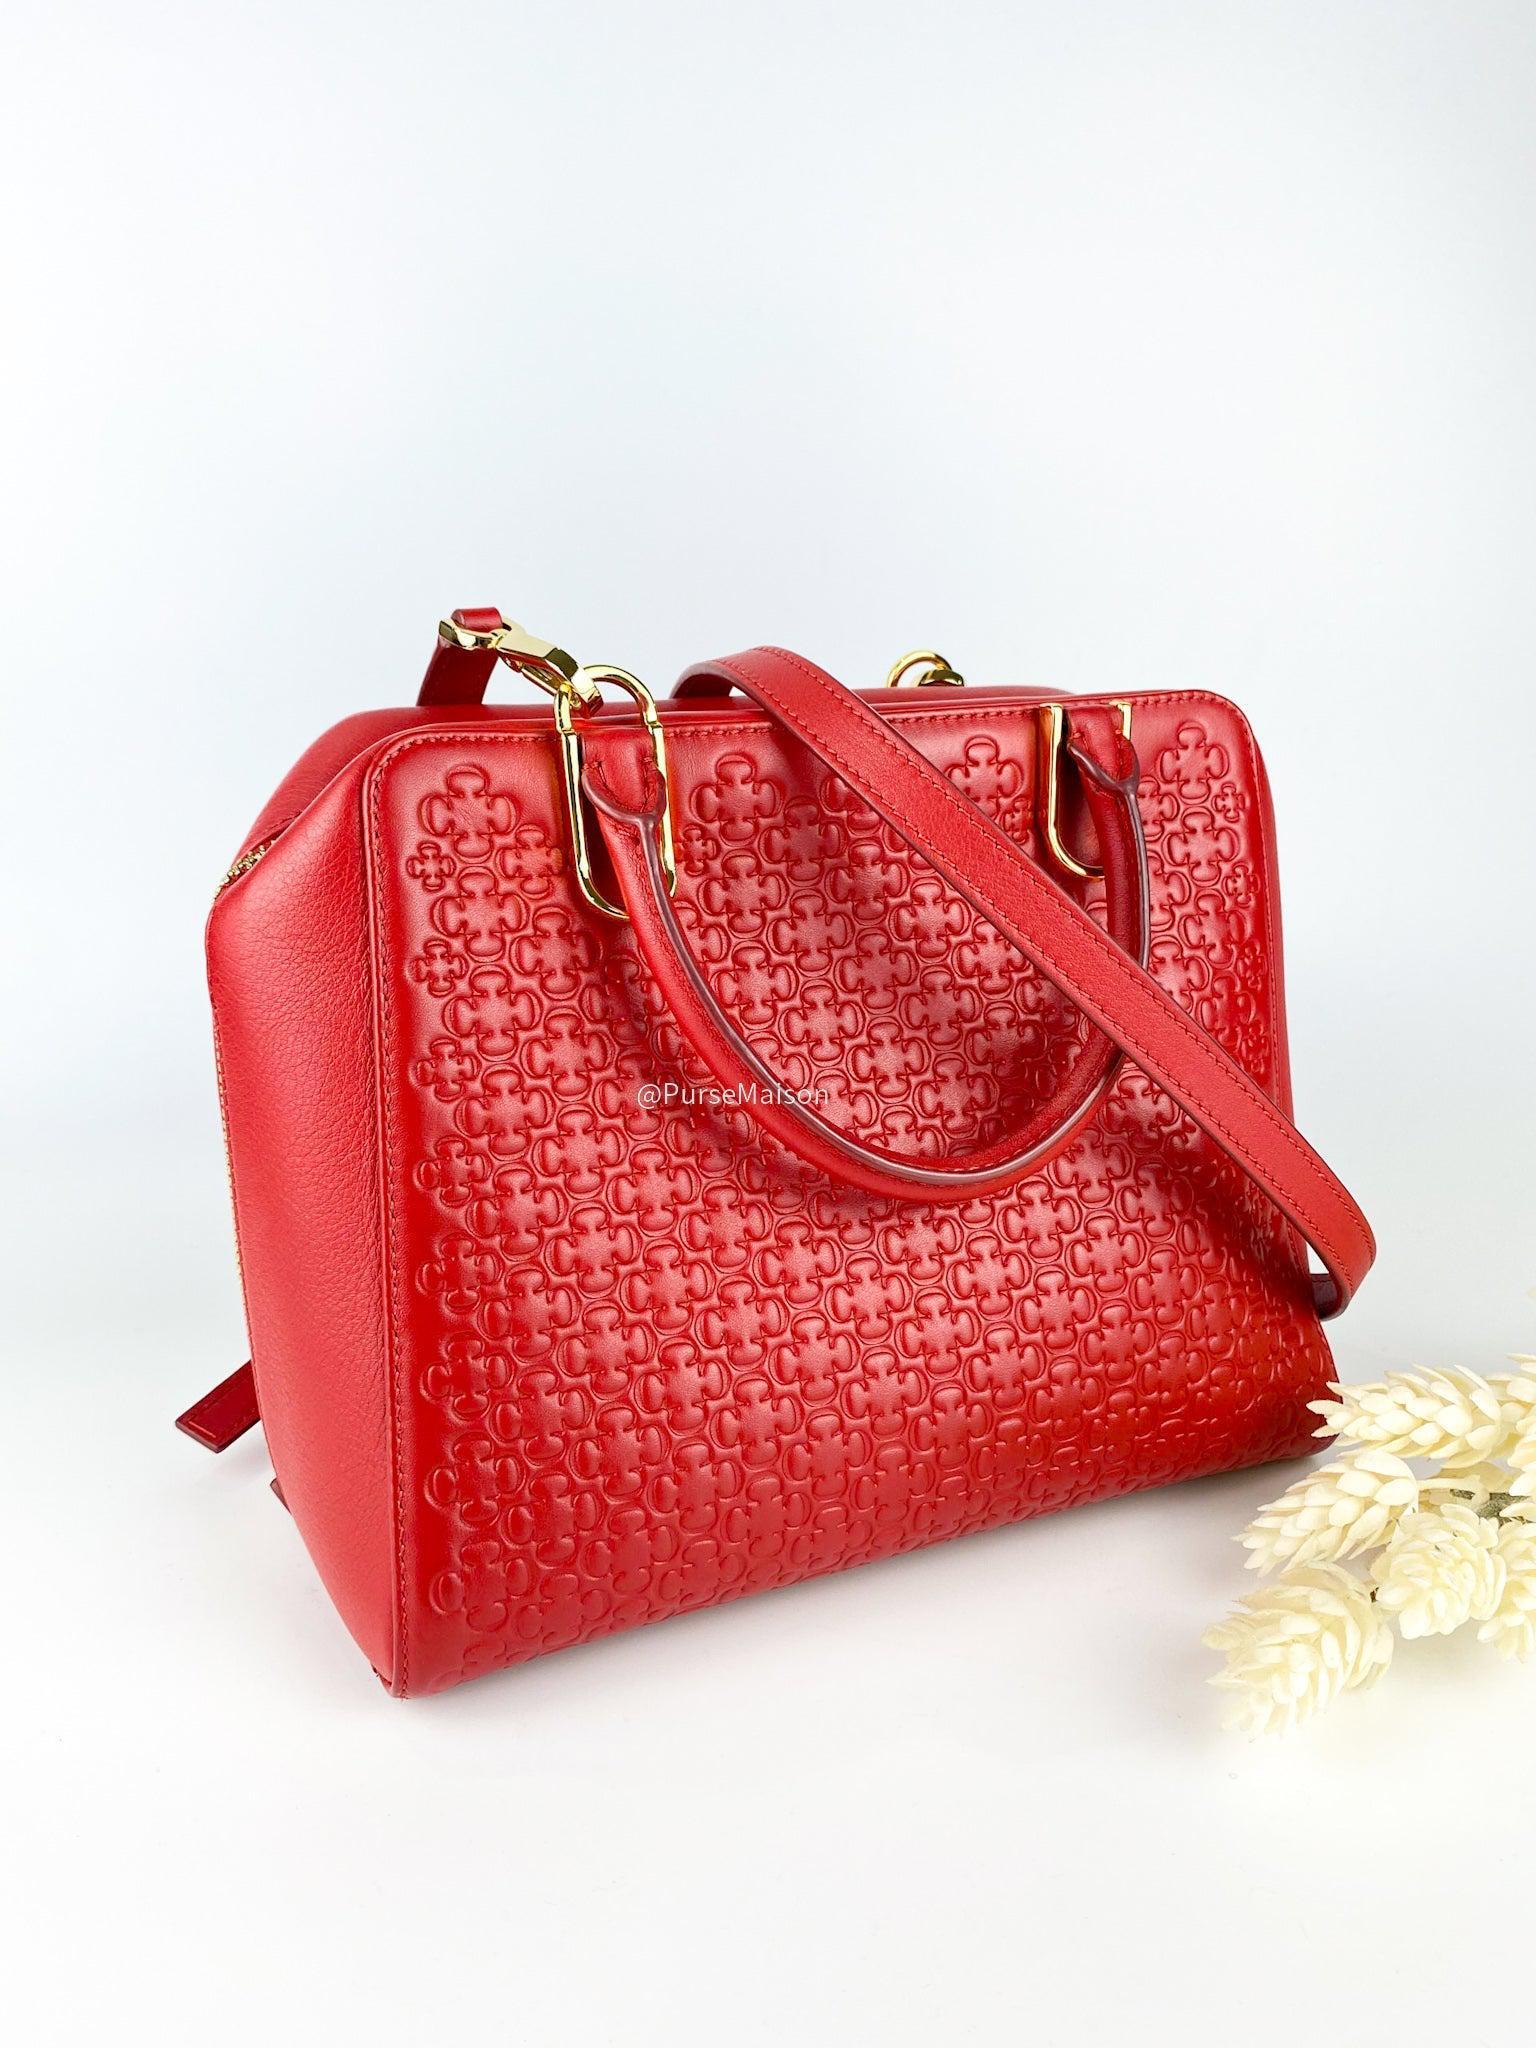 Carolina Herrera duke medium Red Leather Bag